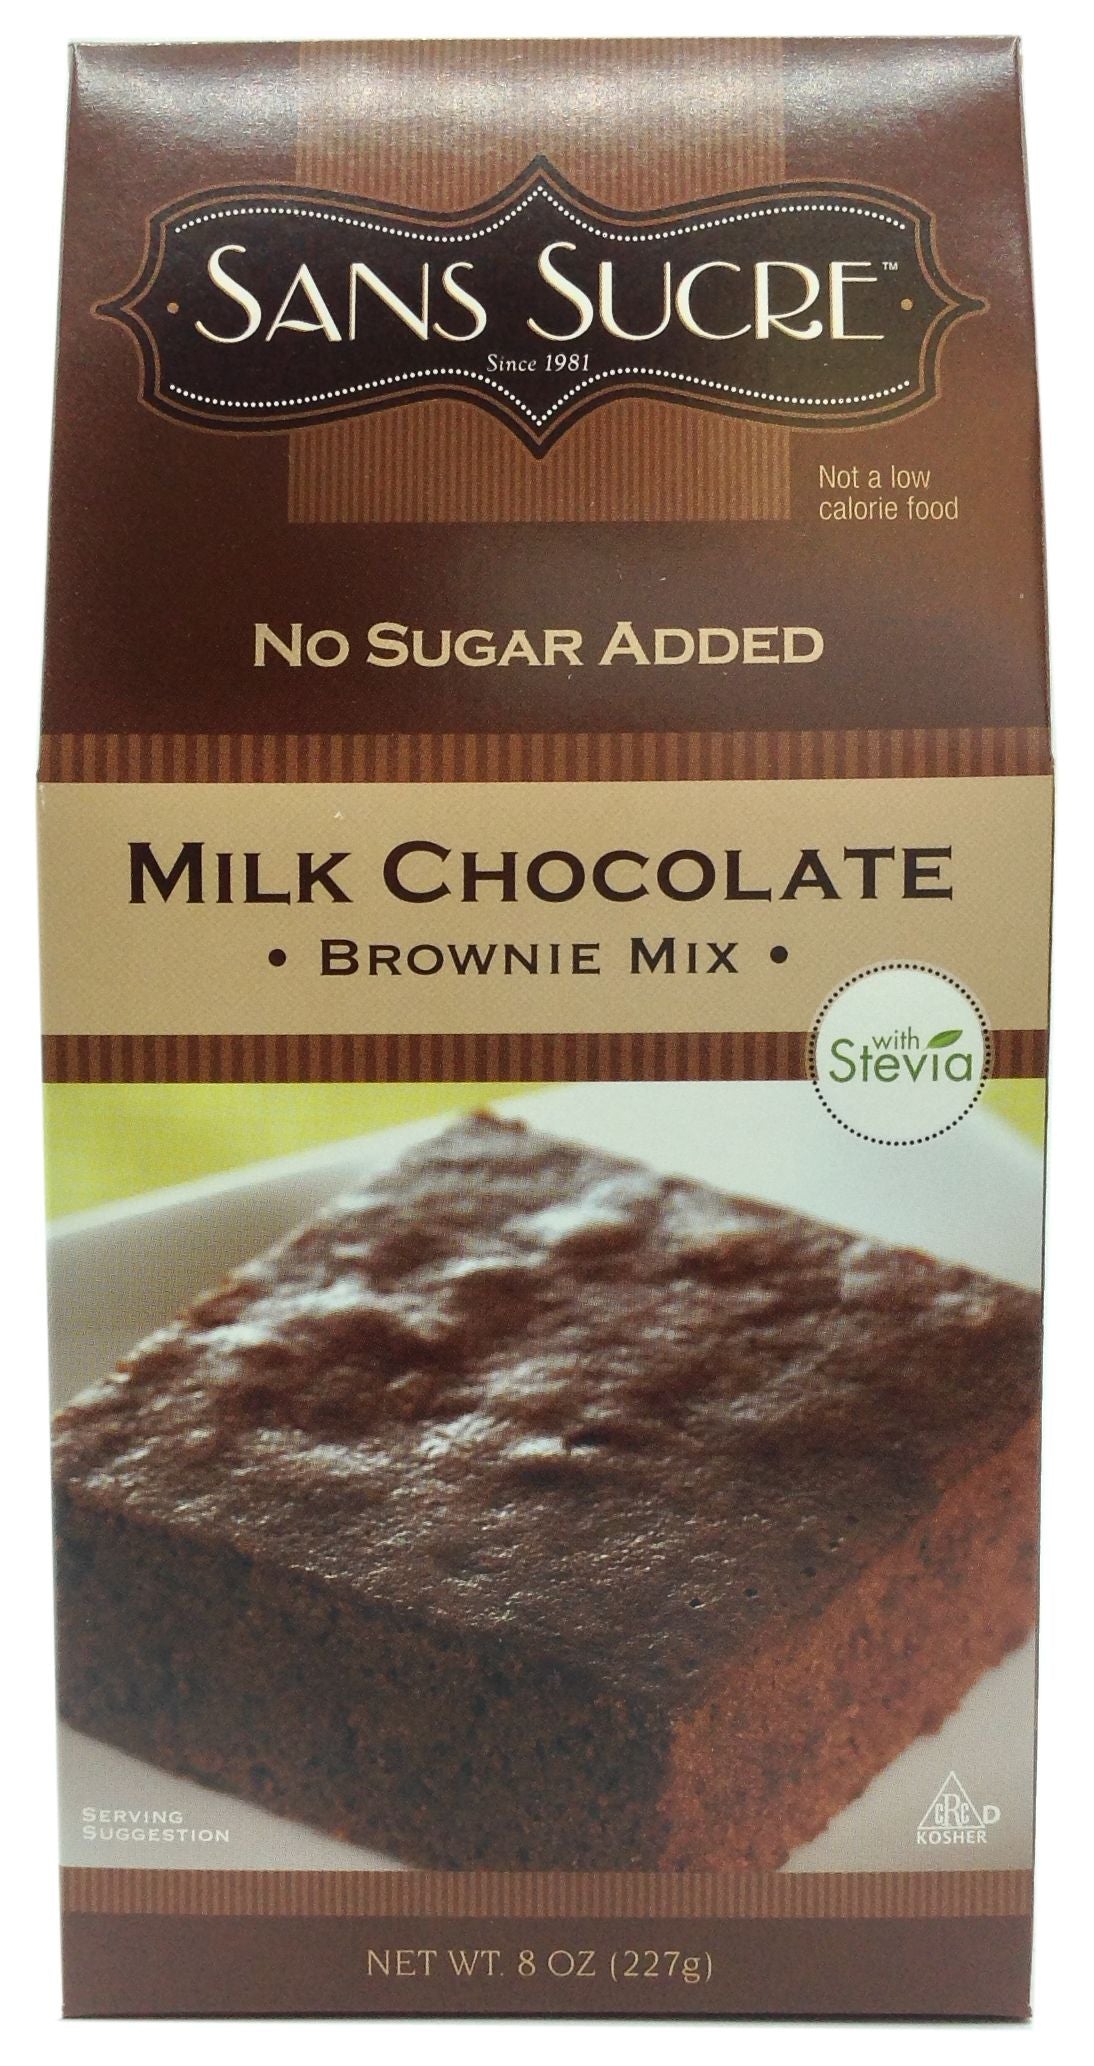 #Flavor_Milk Chocolate, No Sugar Added #Size_8 oz.